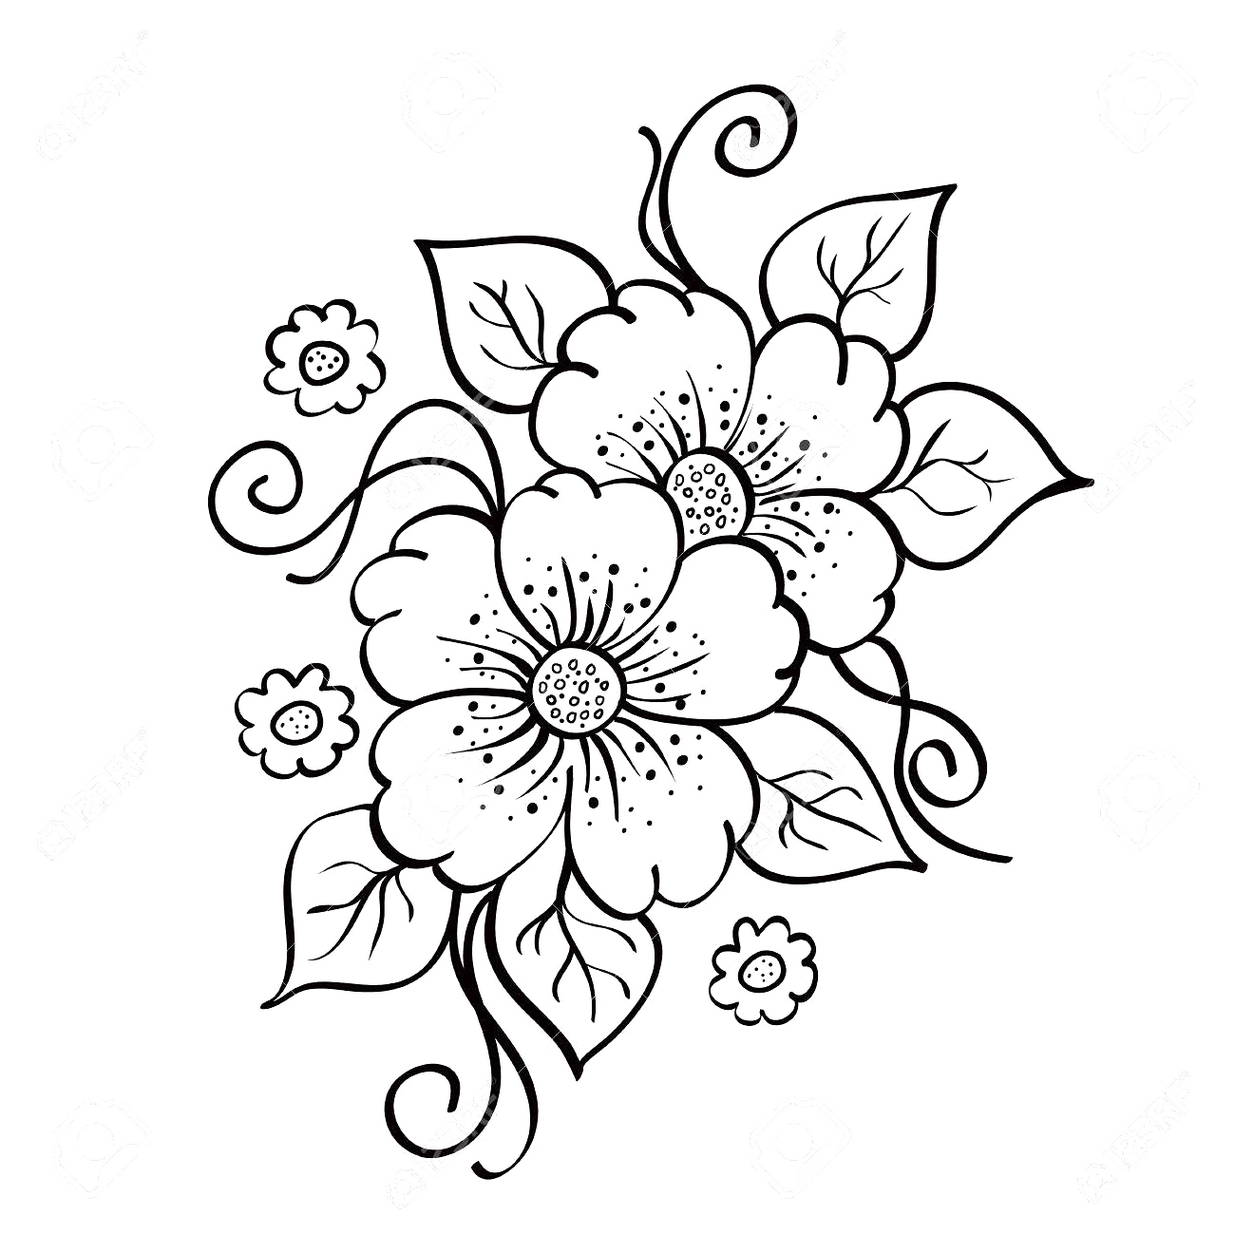 gambar sketsa bunga1